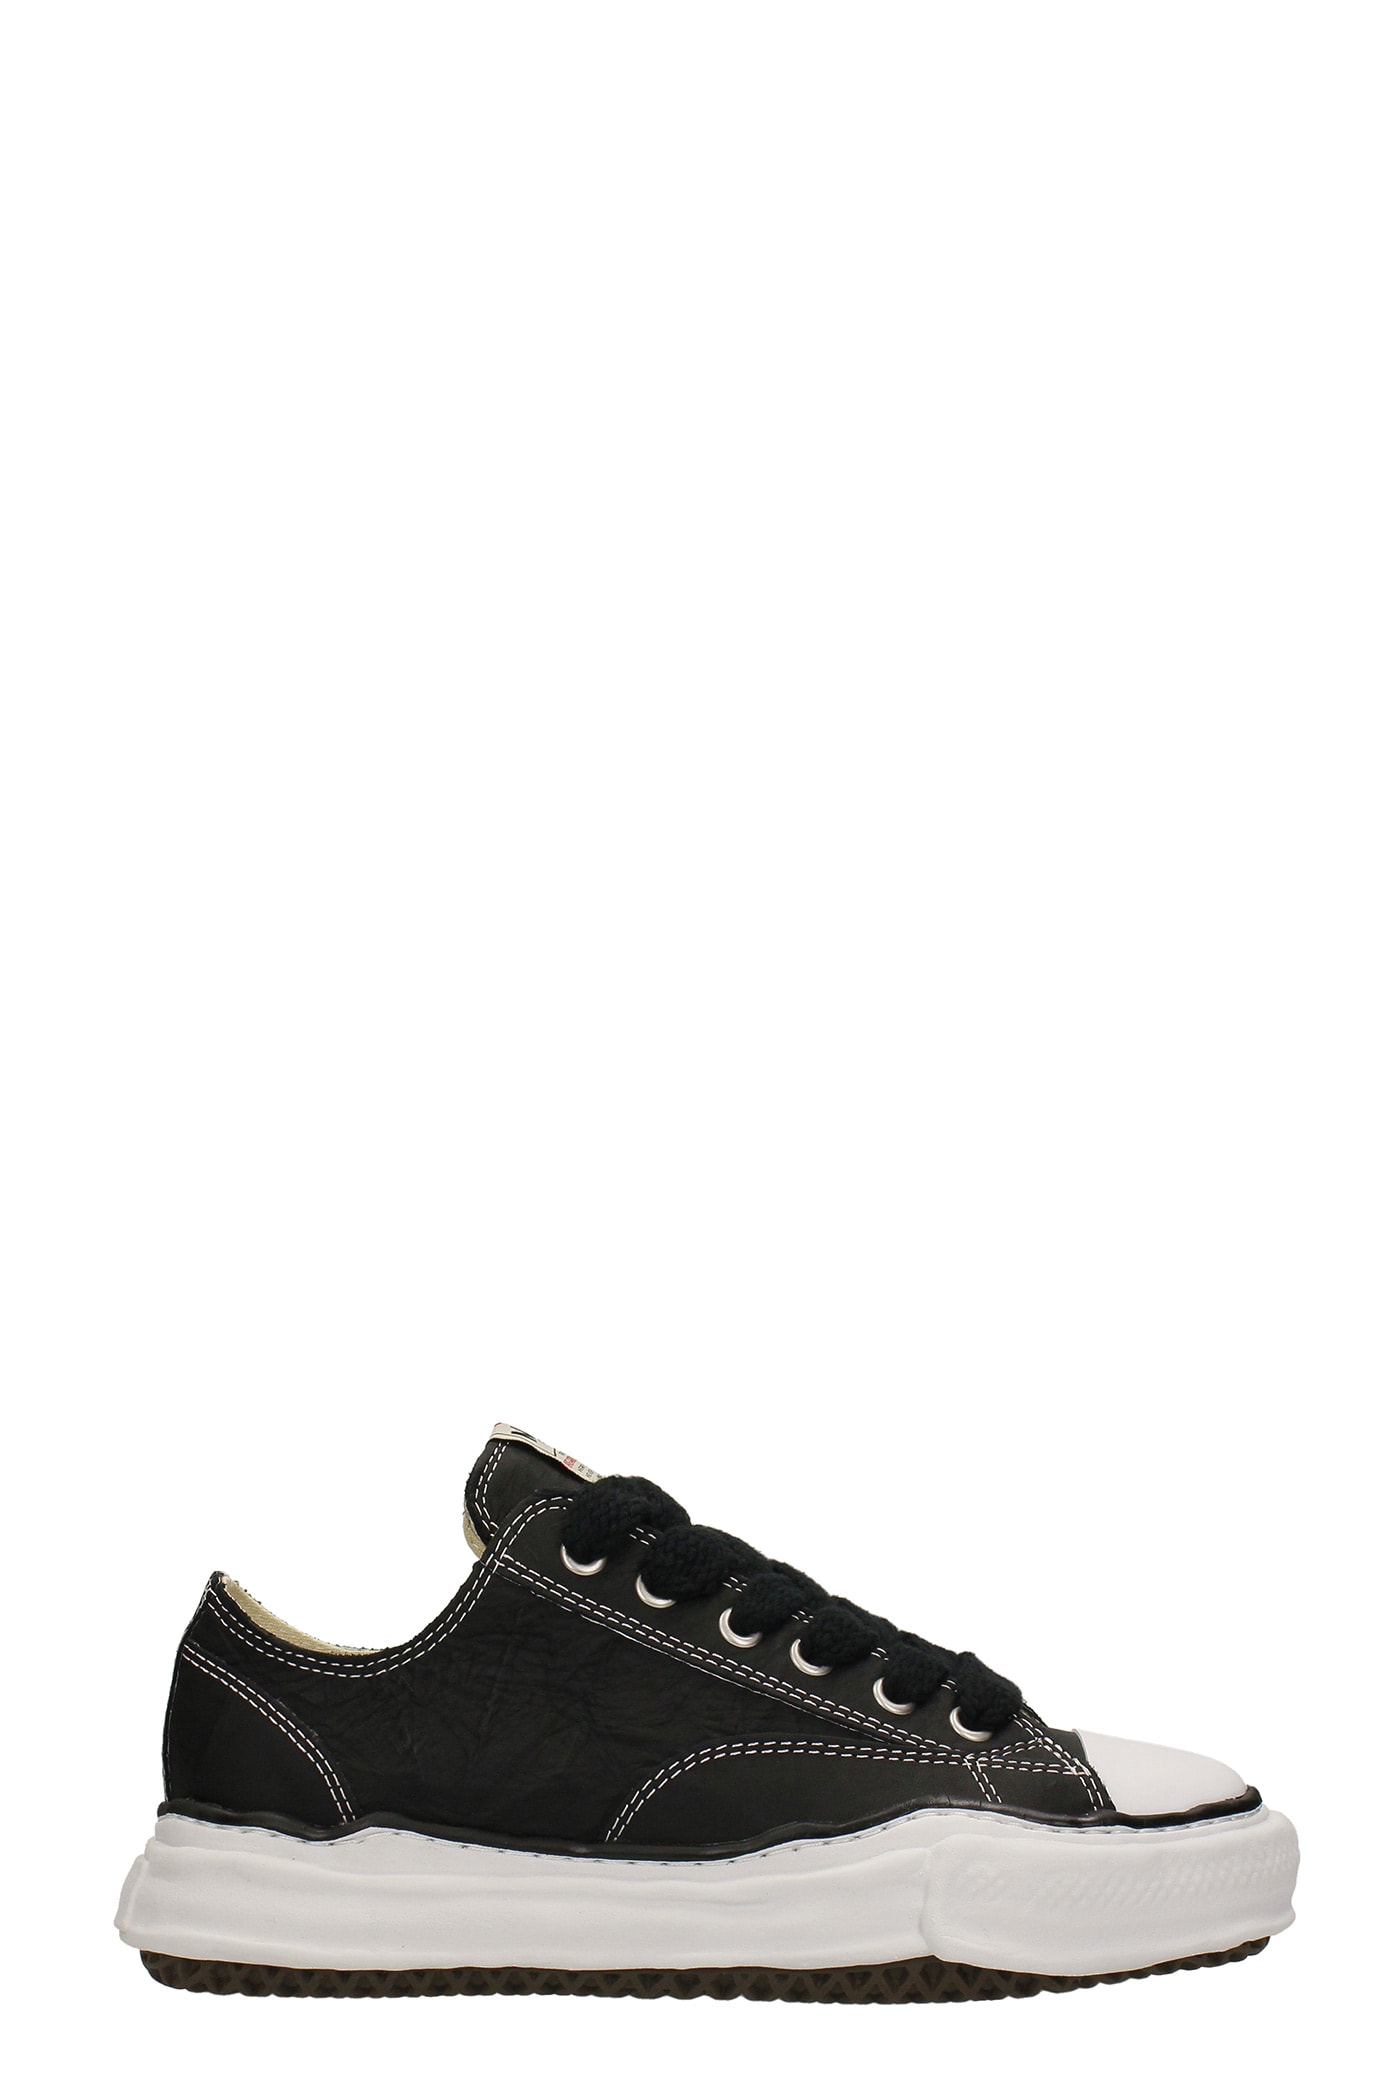 Mihara Yasuhiro Peterson Sneakers In Black Leather